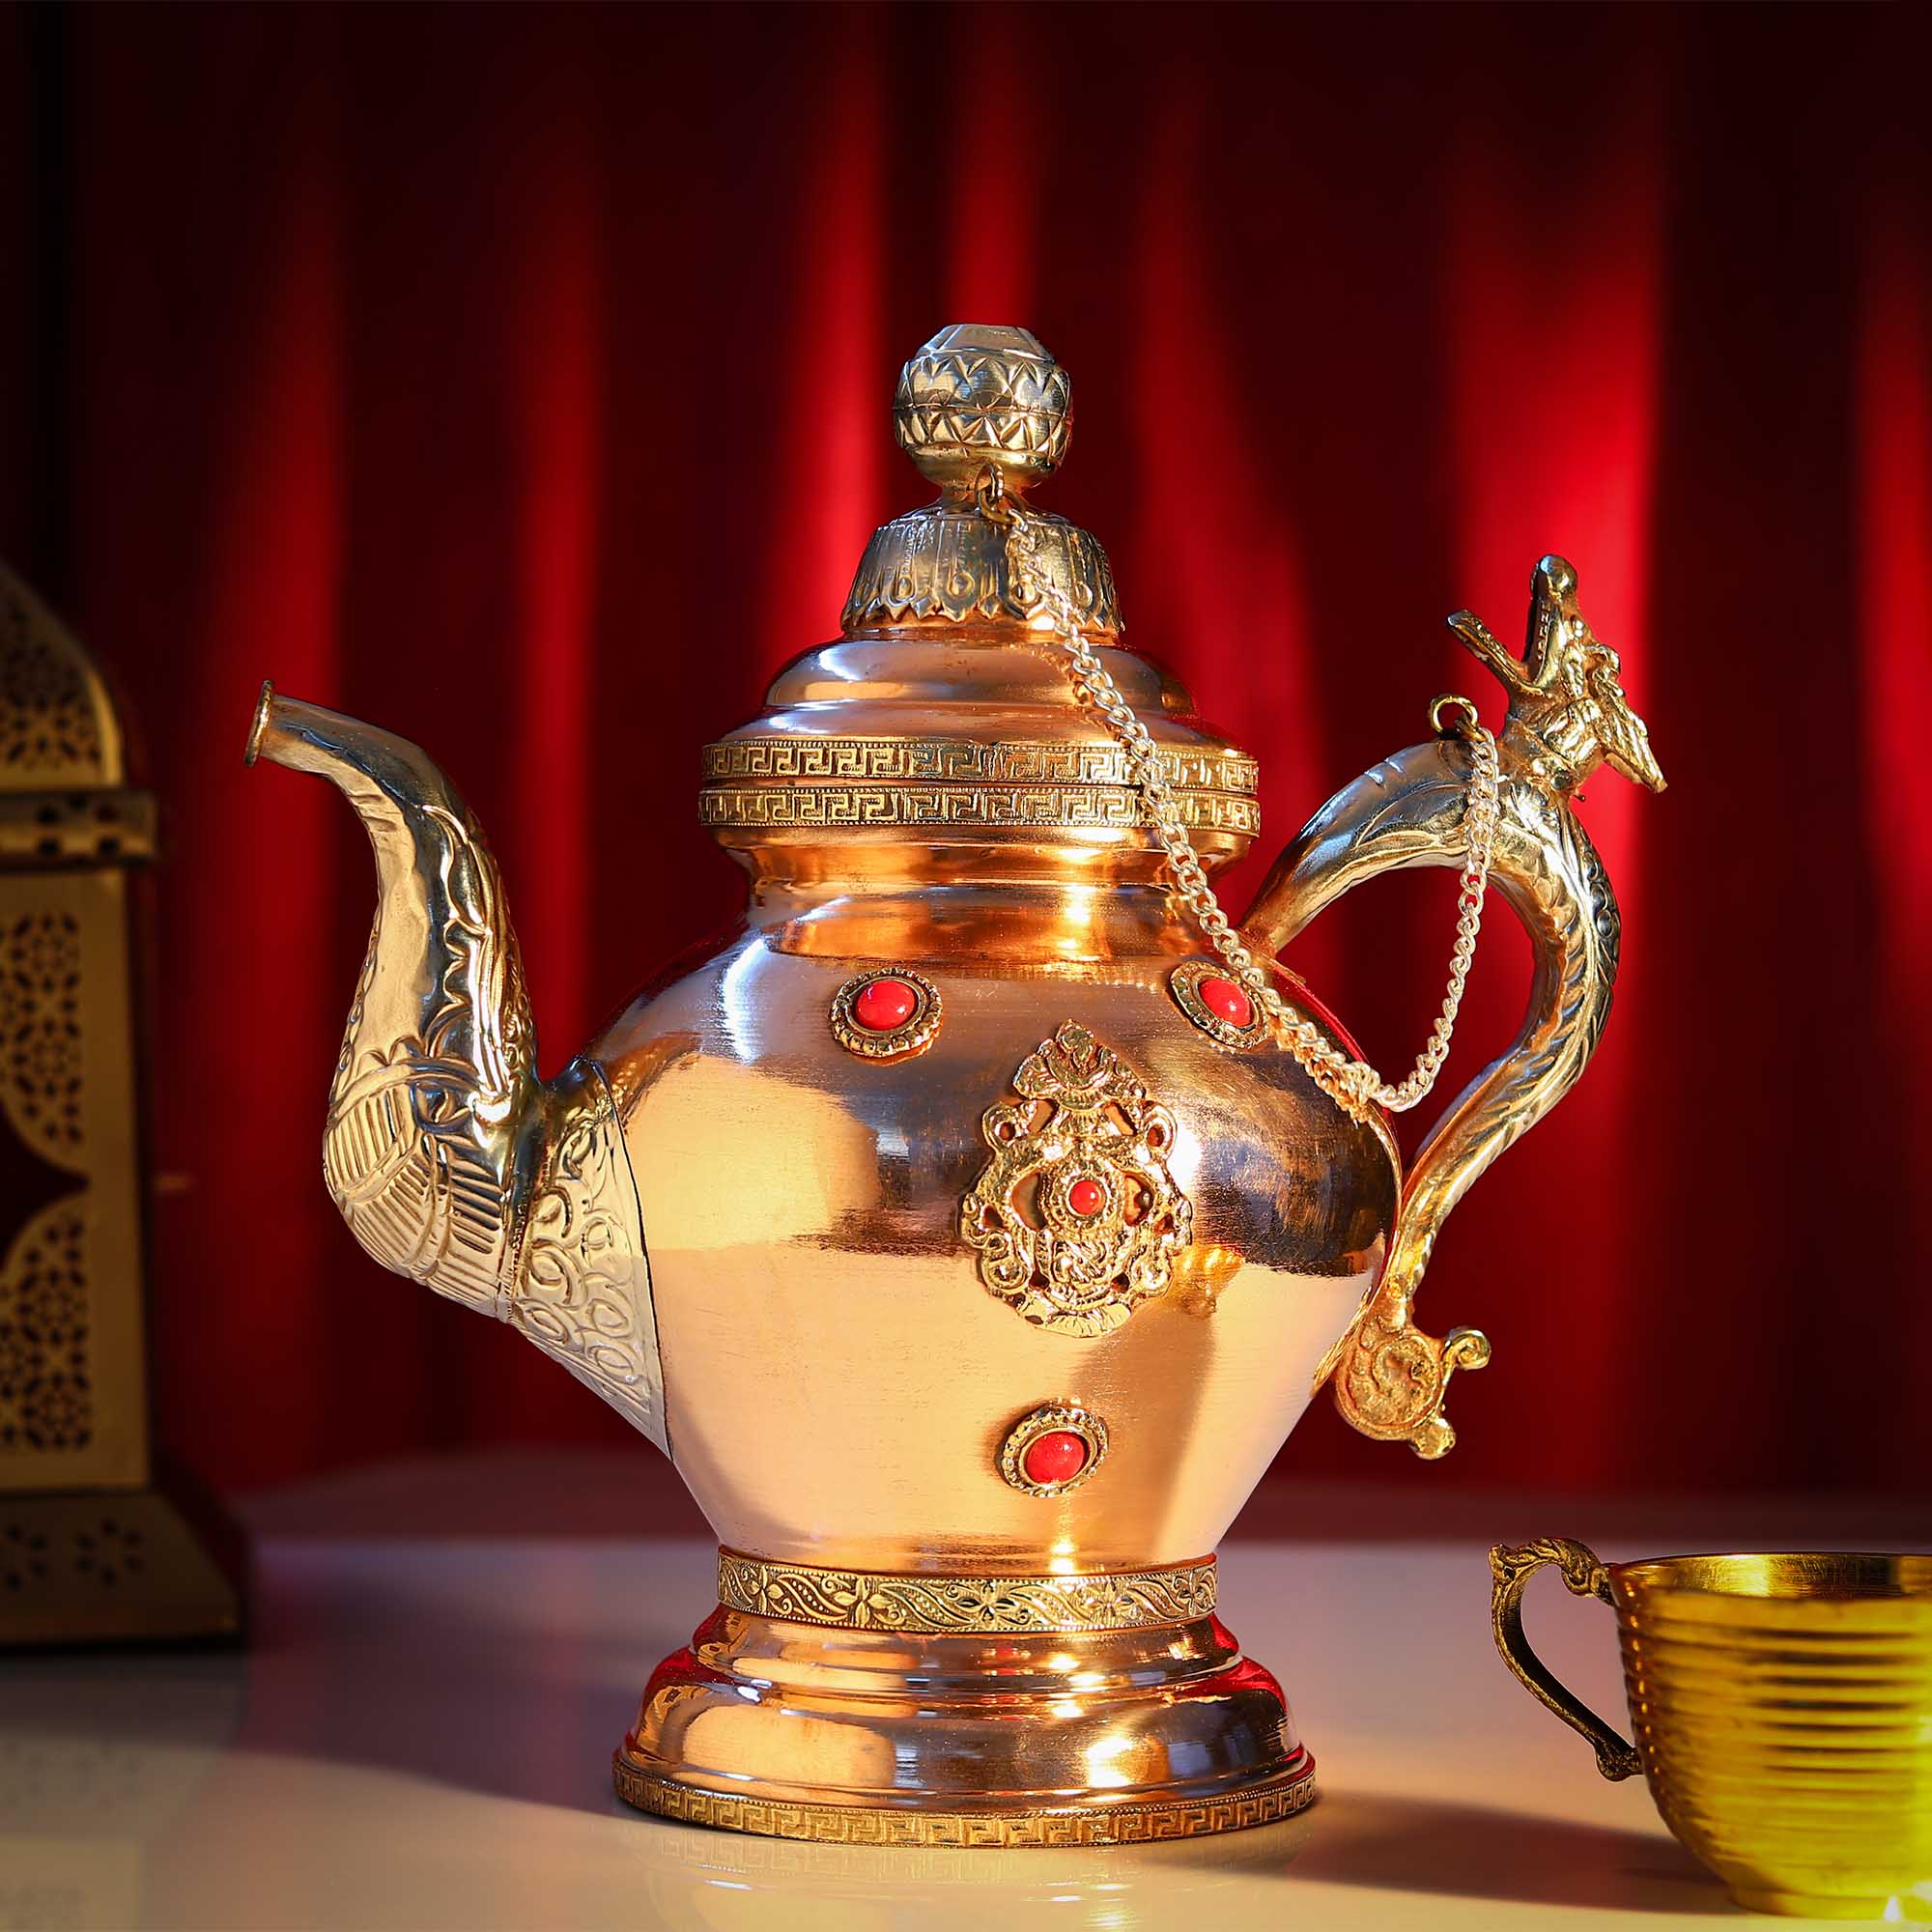 Timeless Elegance: Embrace Nostalgia with the Vintage Brass Teapot